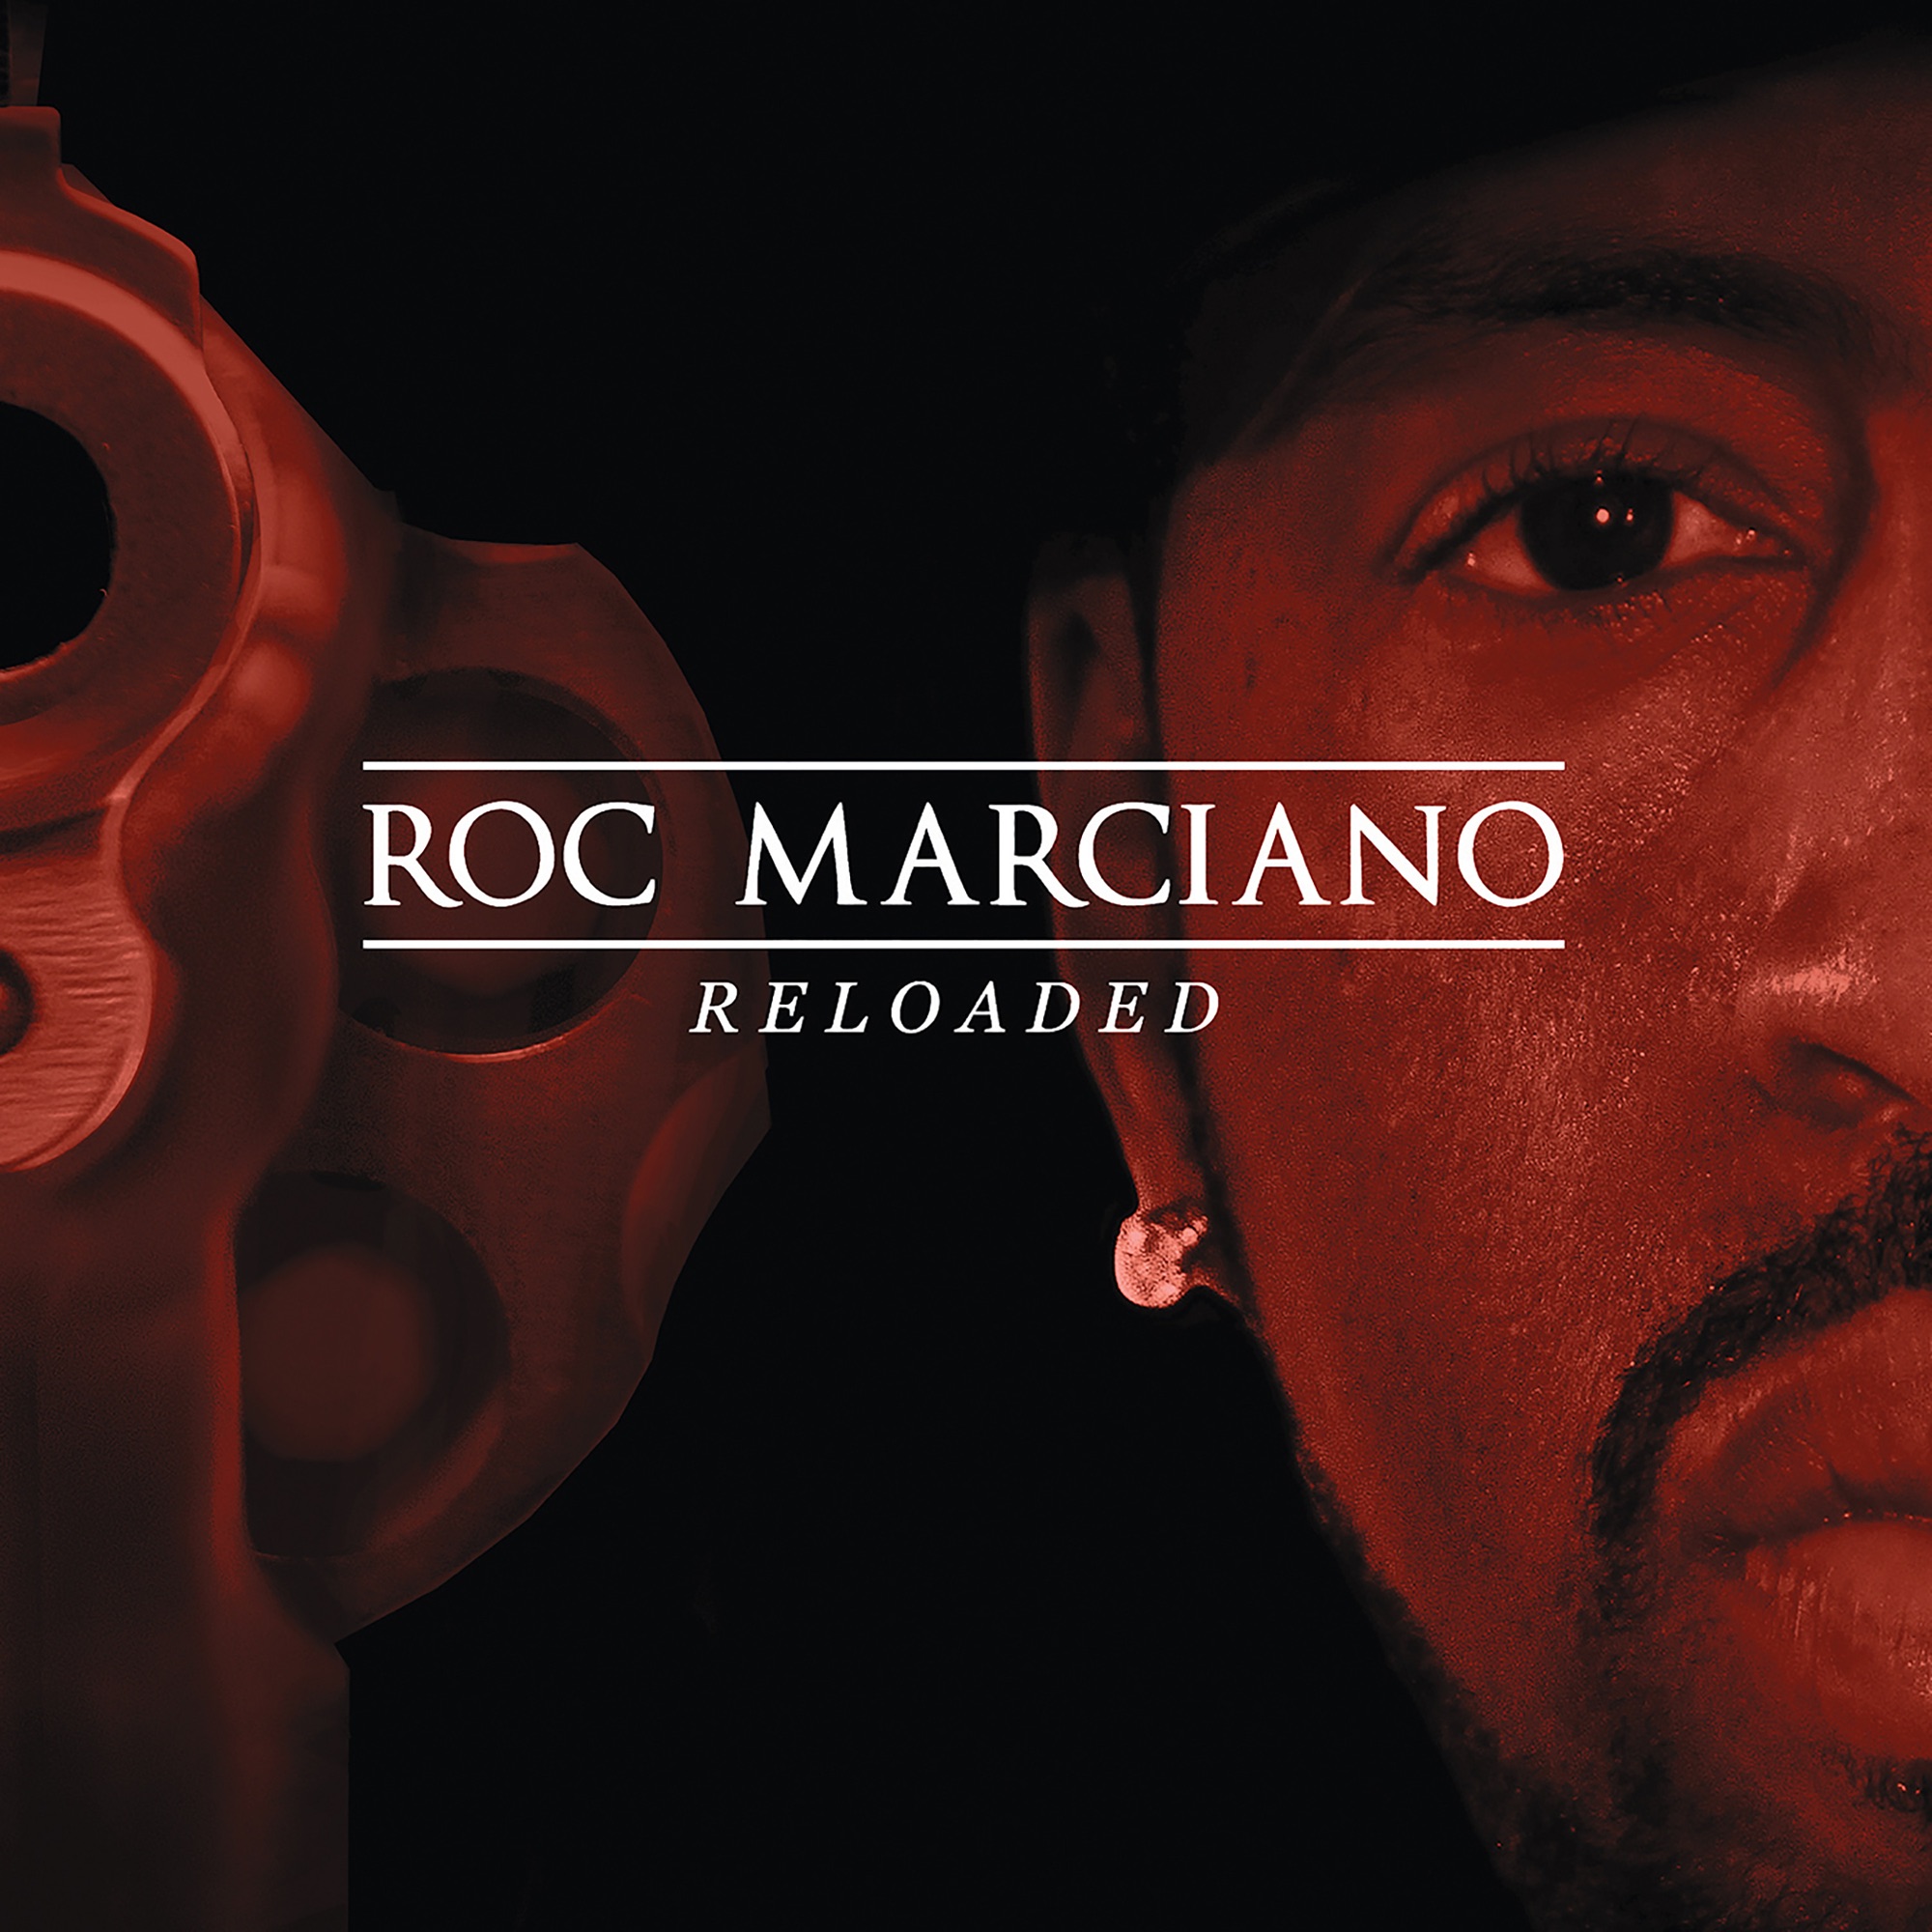 Roc marciano reloaded album download